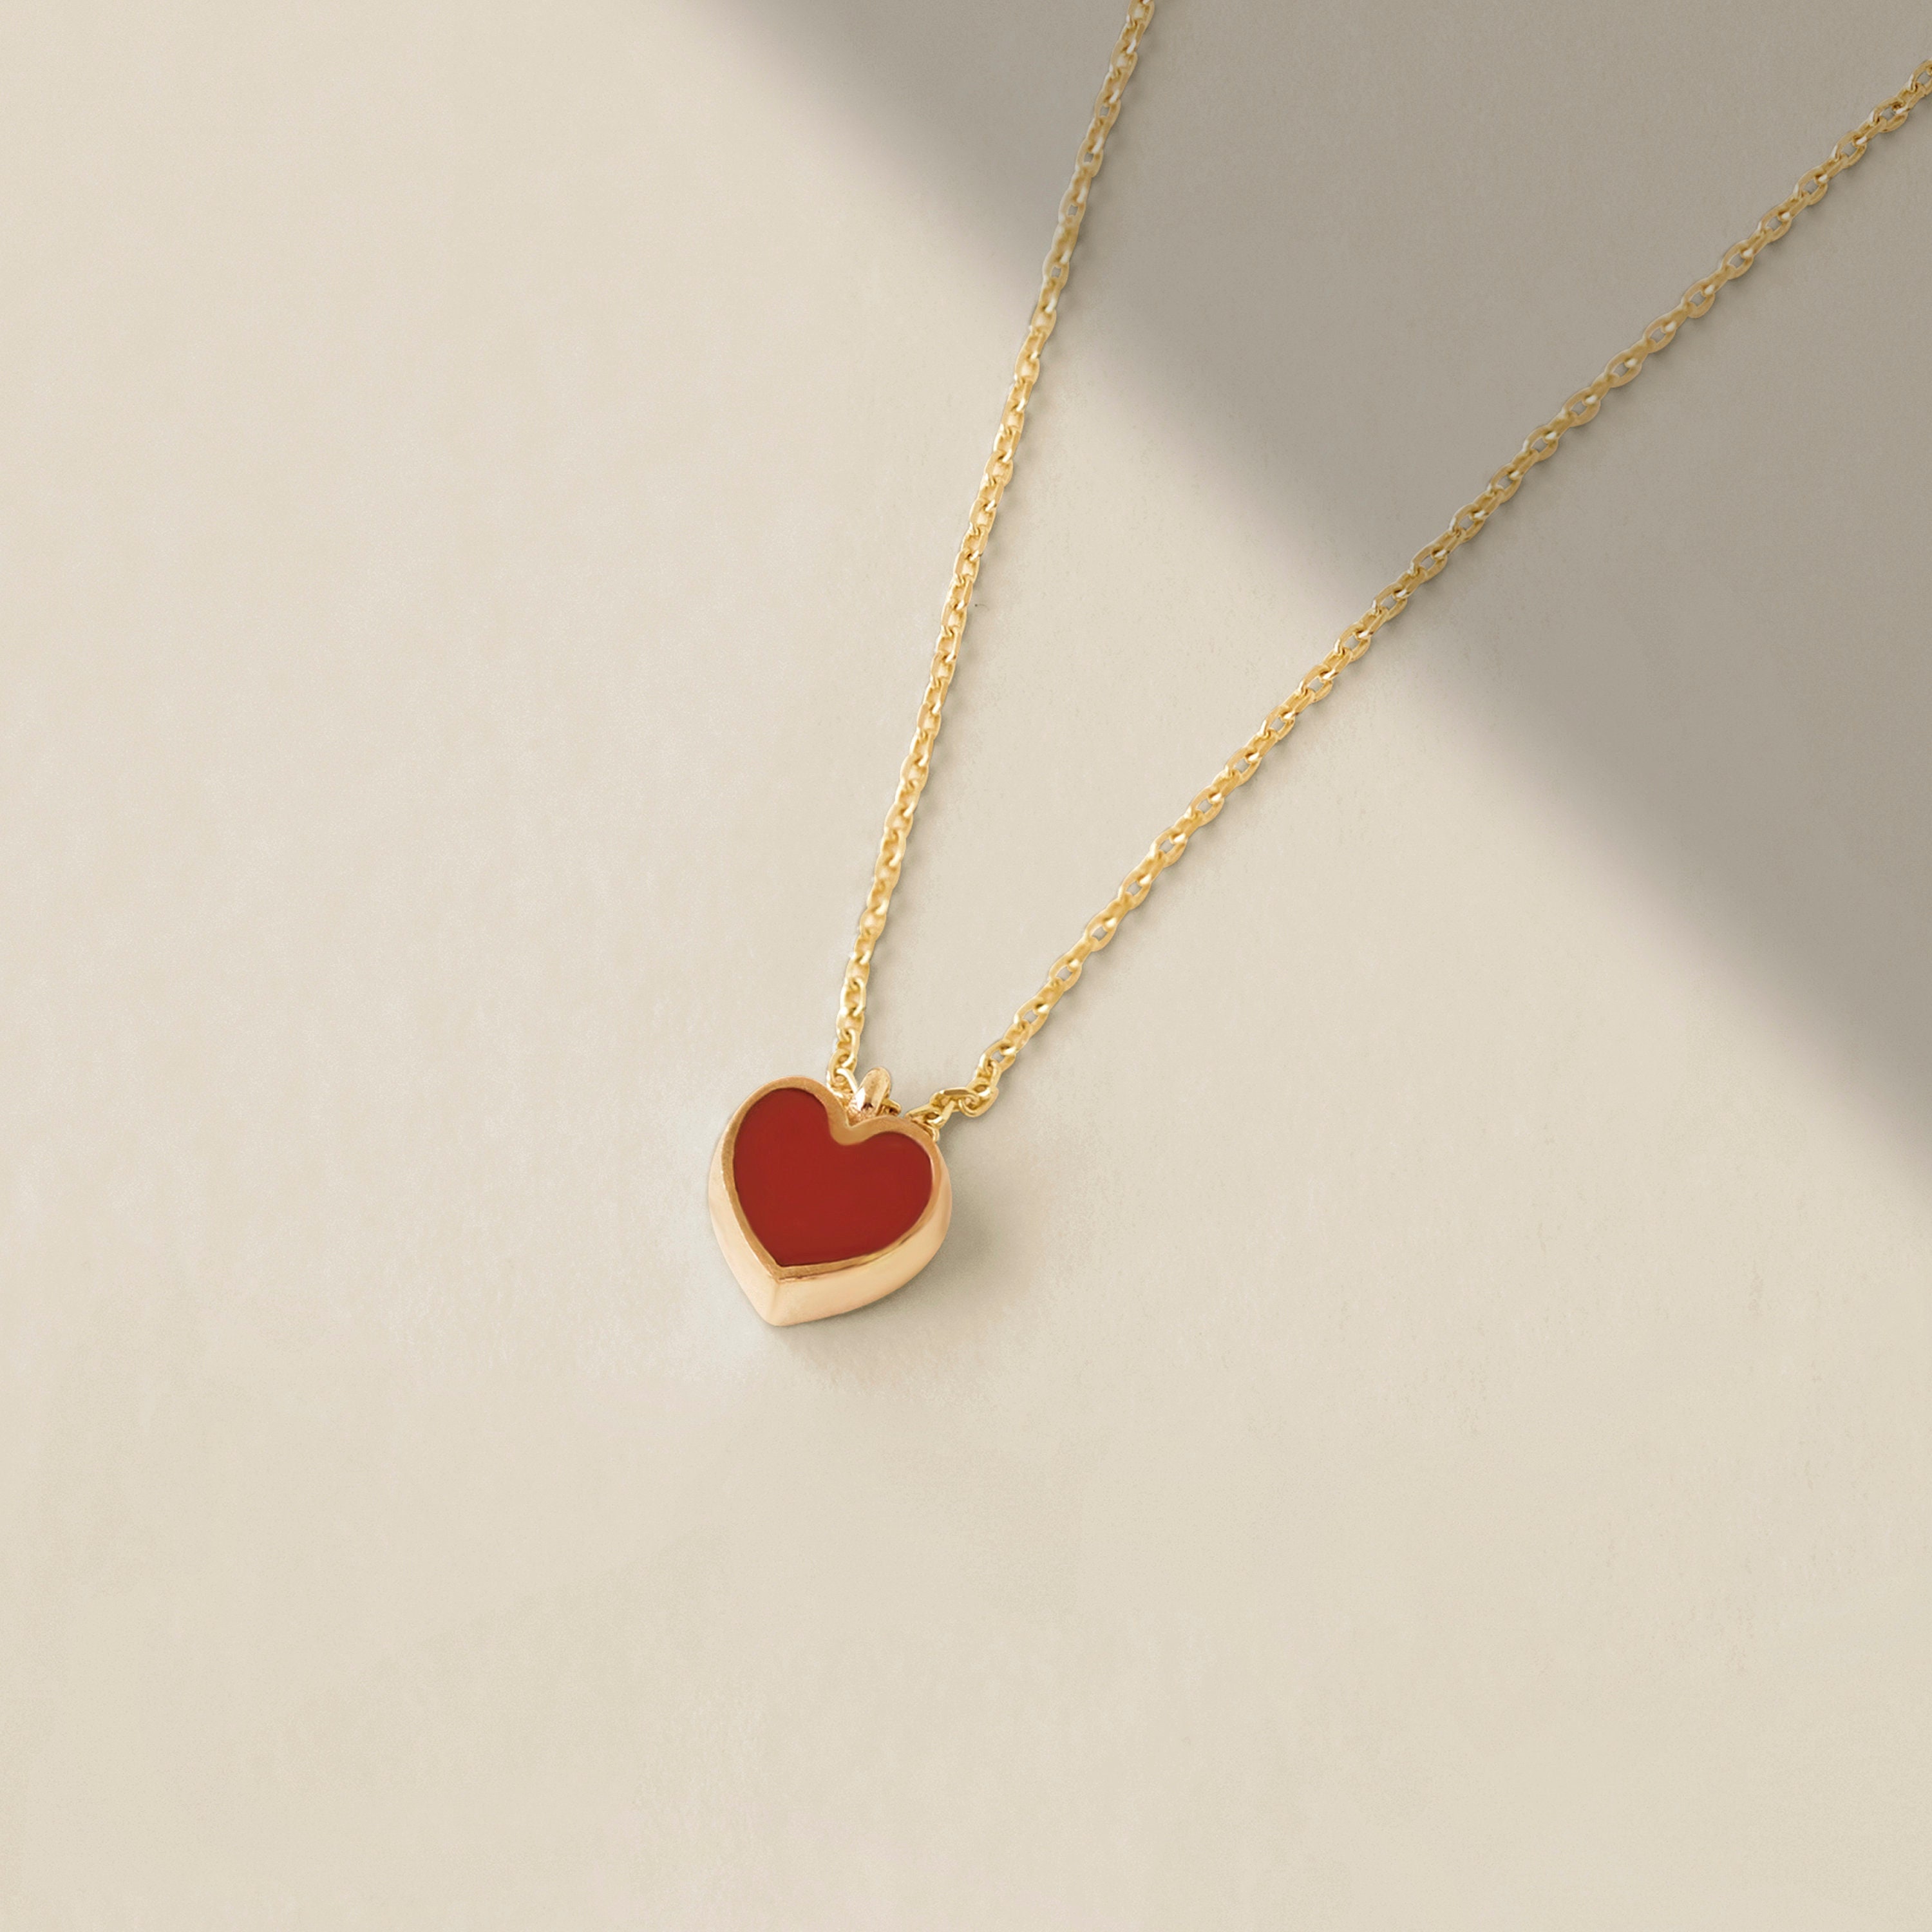 Solid Gold Red Heart Necklace 14k Gold Love Pendant - Sweden